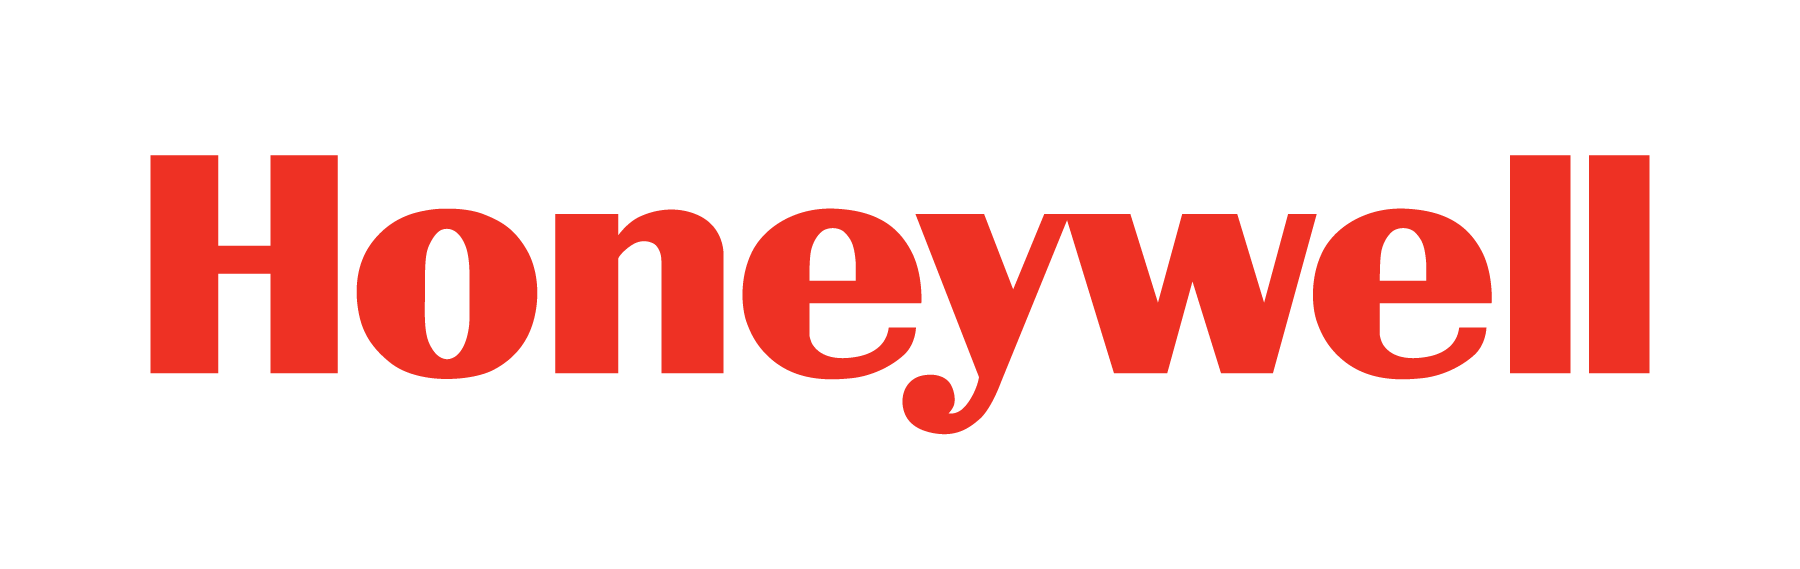 Honeywell_Logo_RGB_Red.png